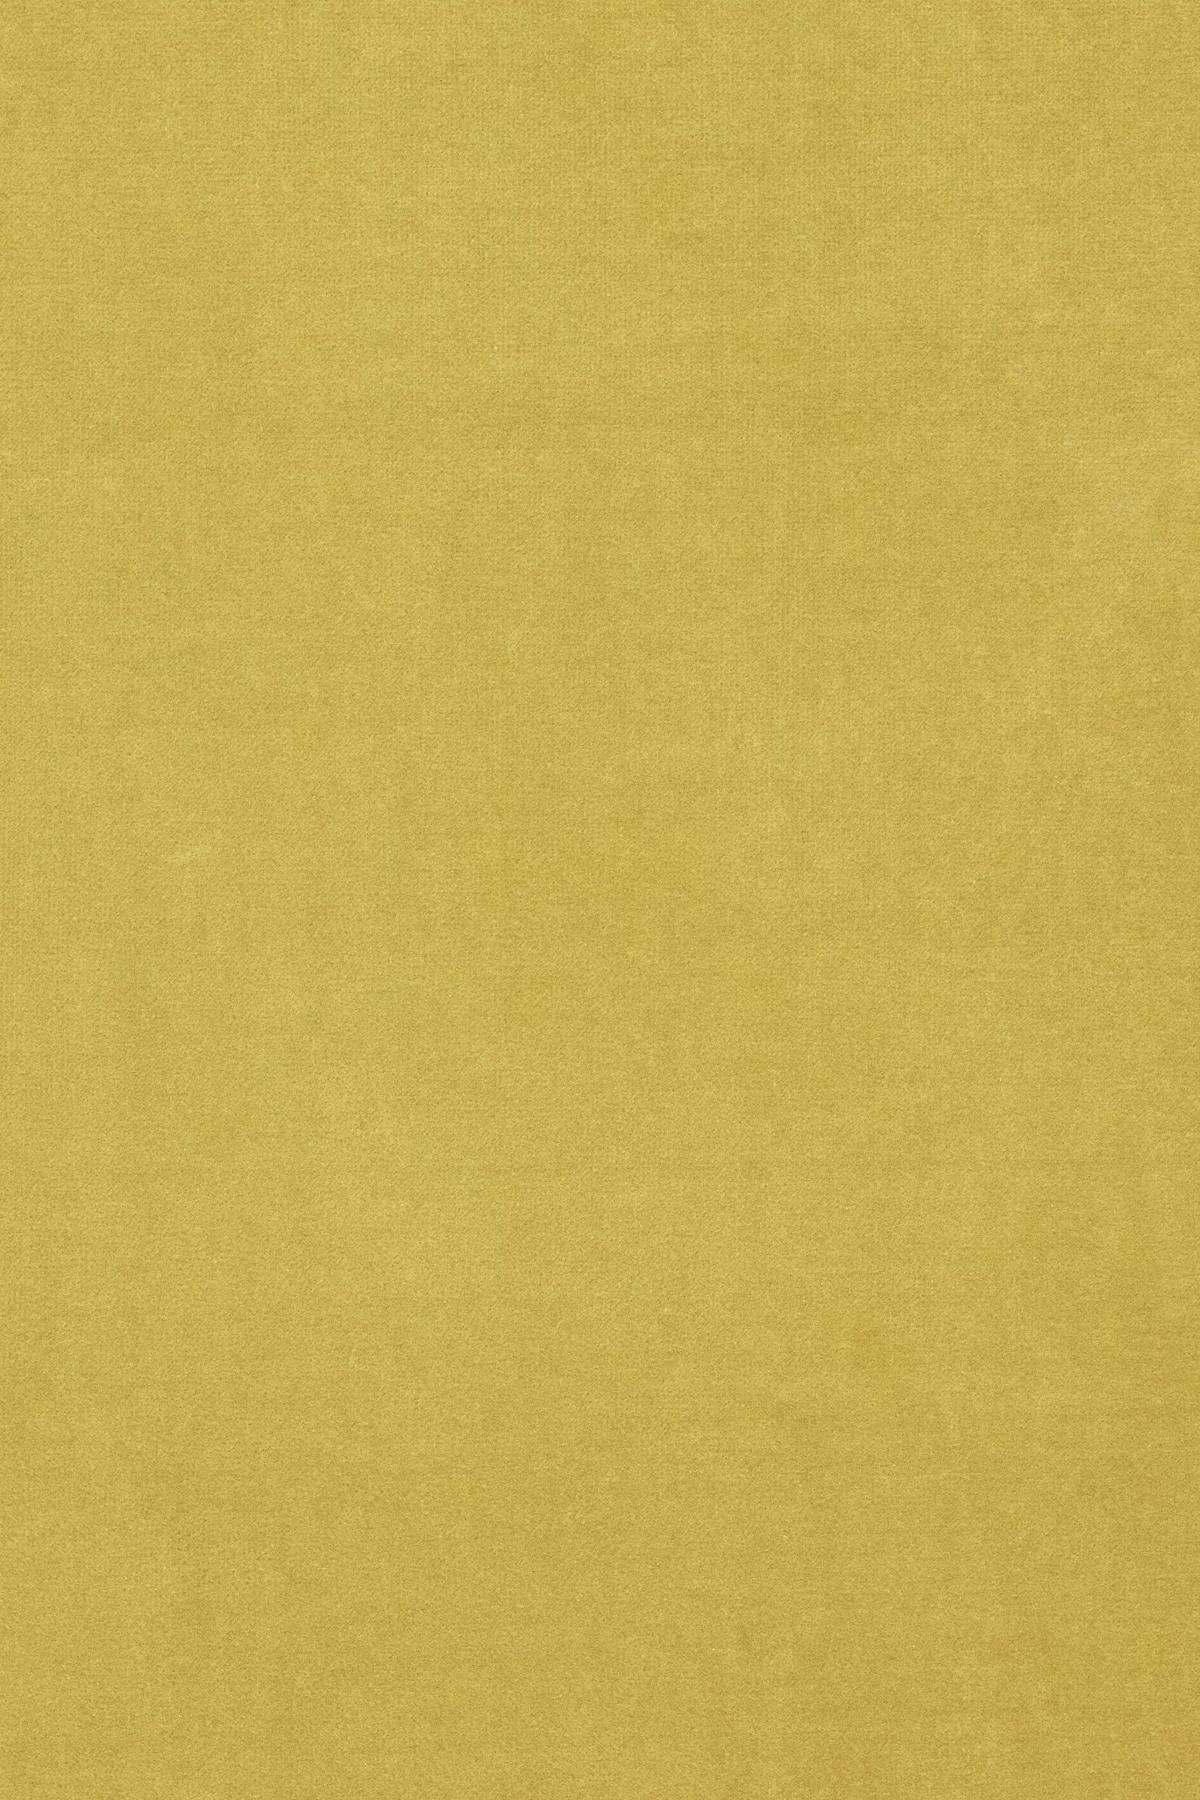 Fabric sample Harald 3 443 yellow